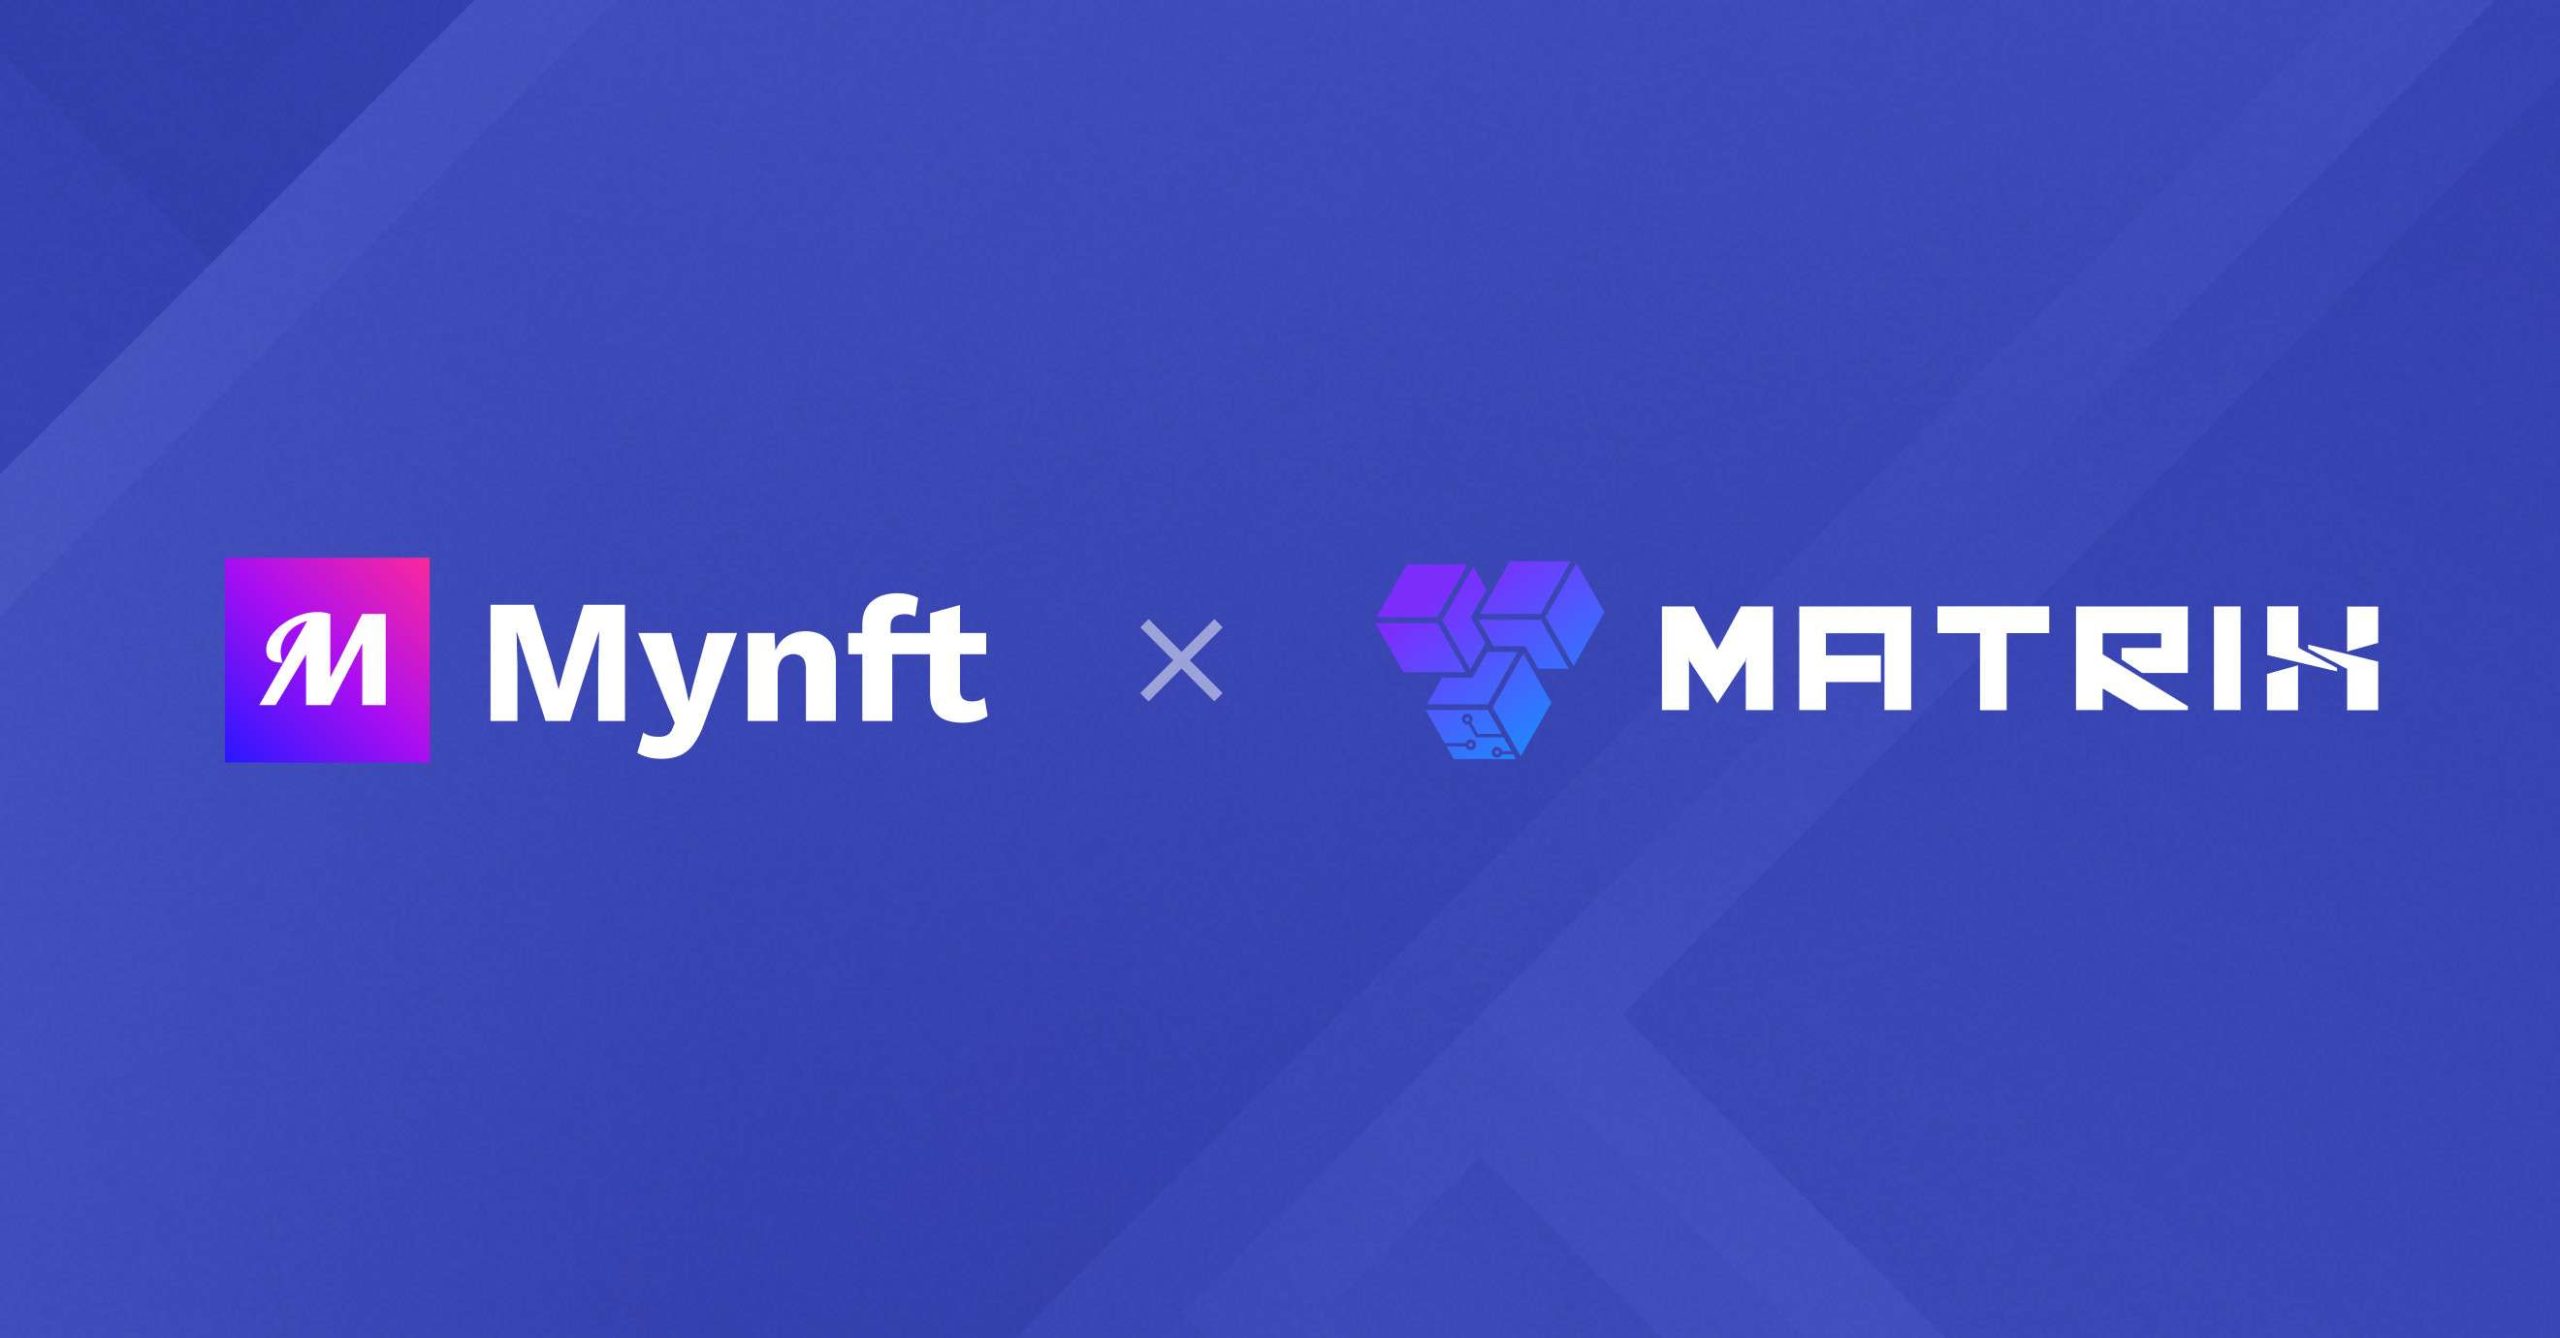 Mynft hợp tác với Matrix World